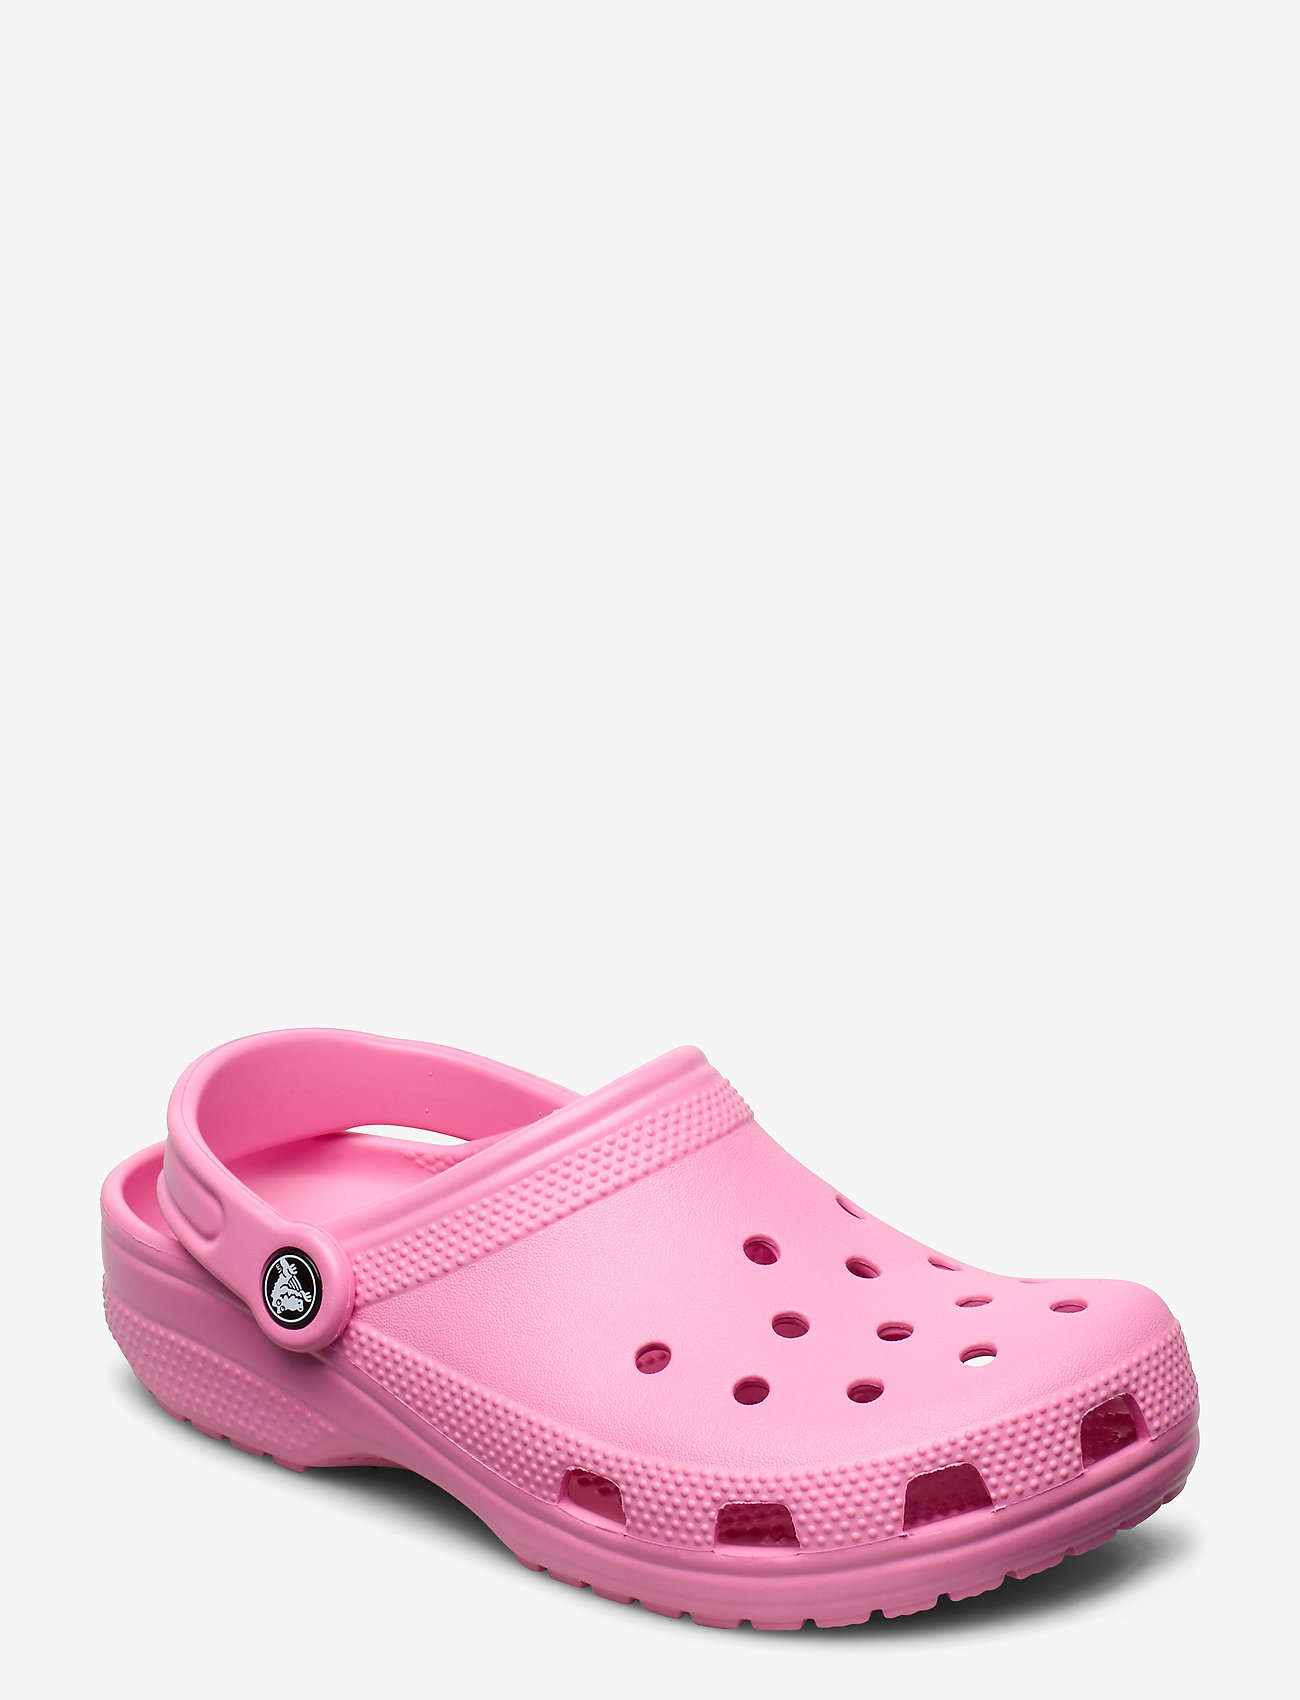 crocs pink